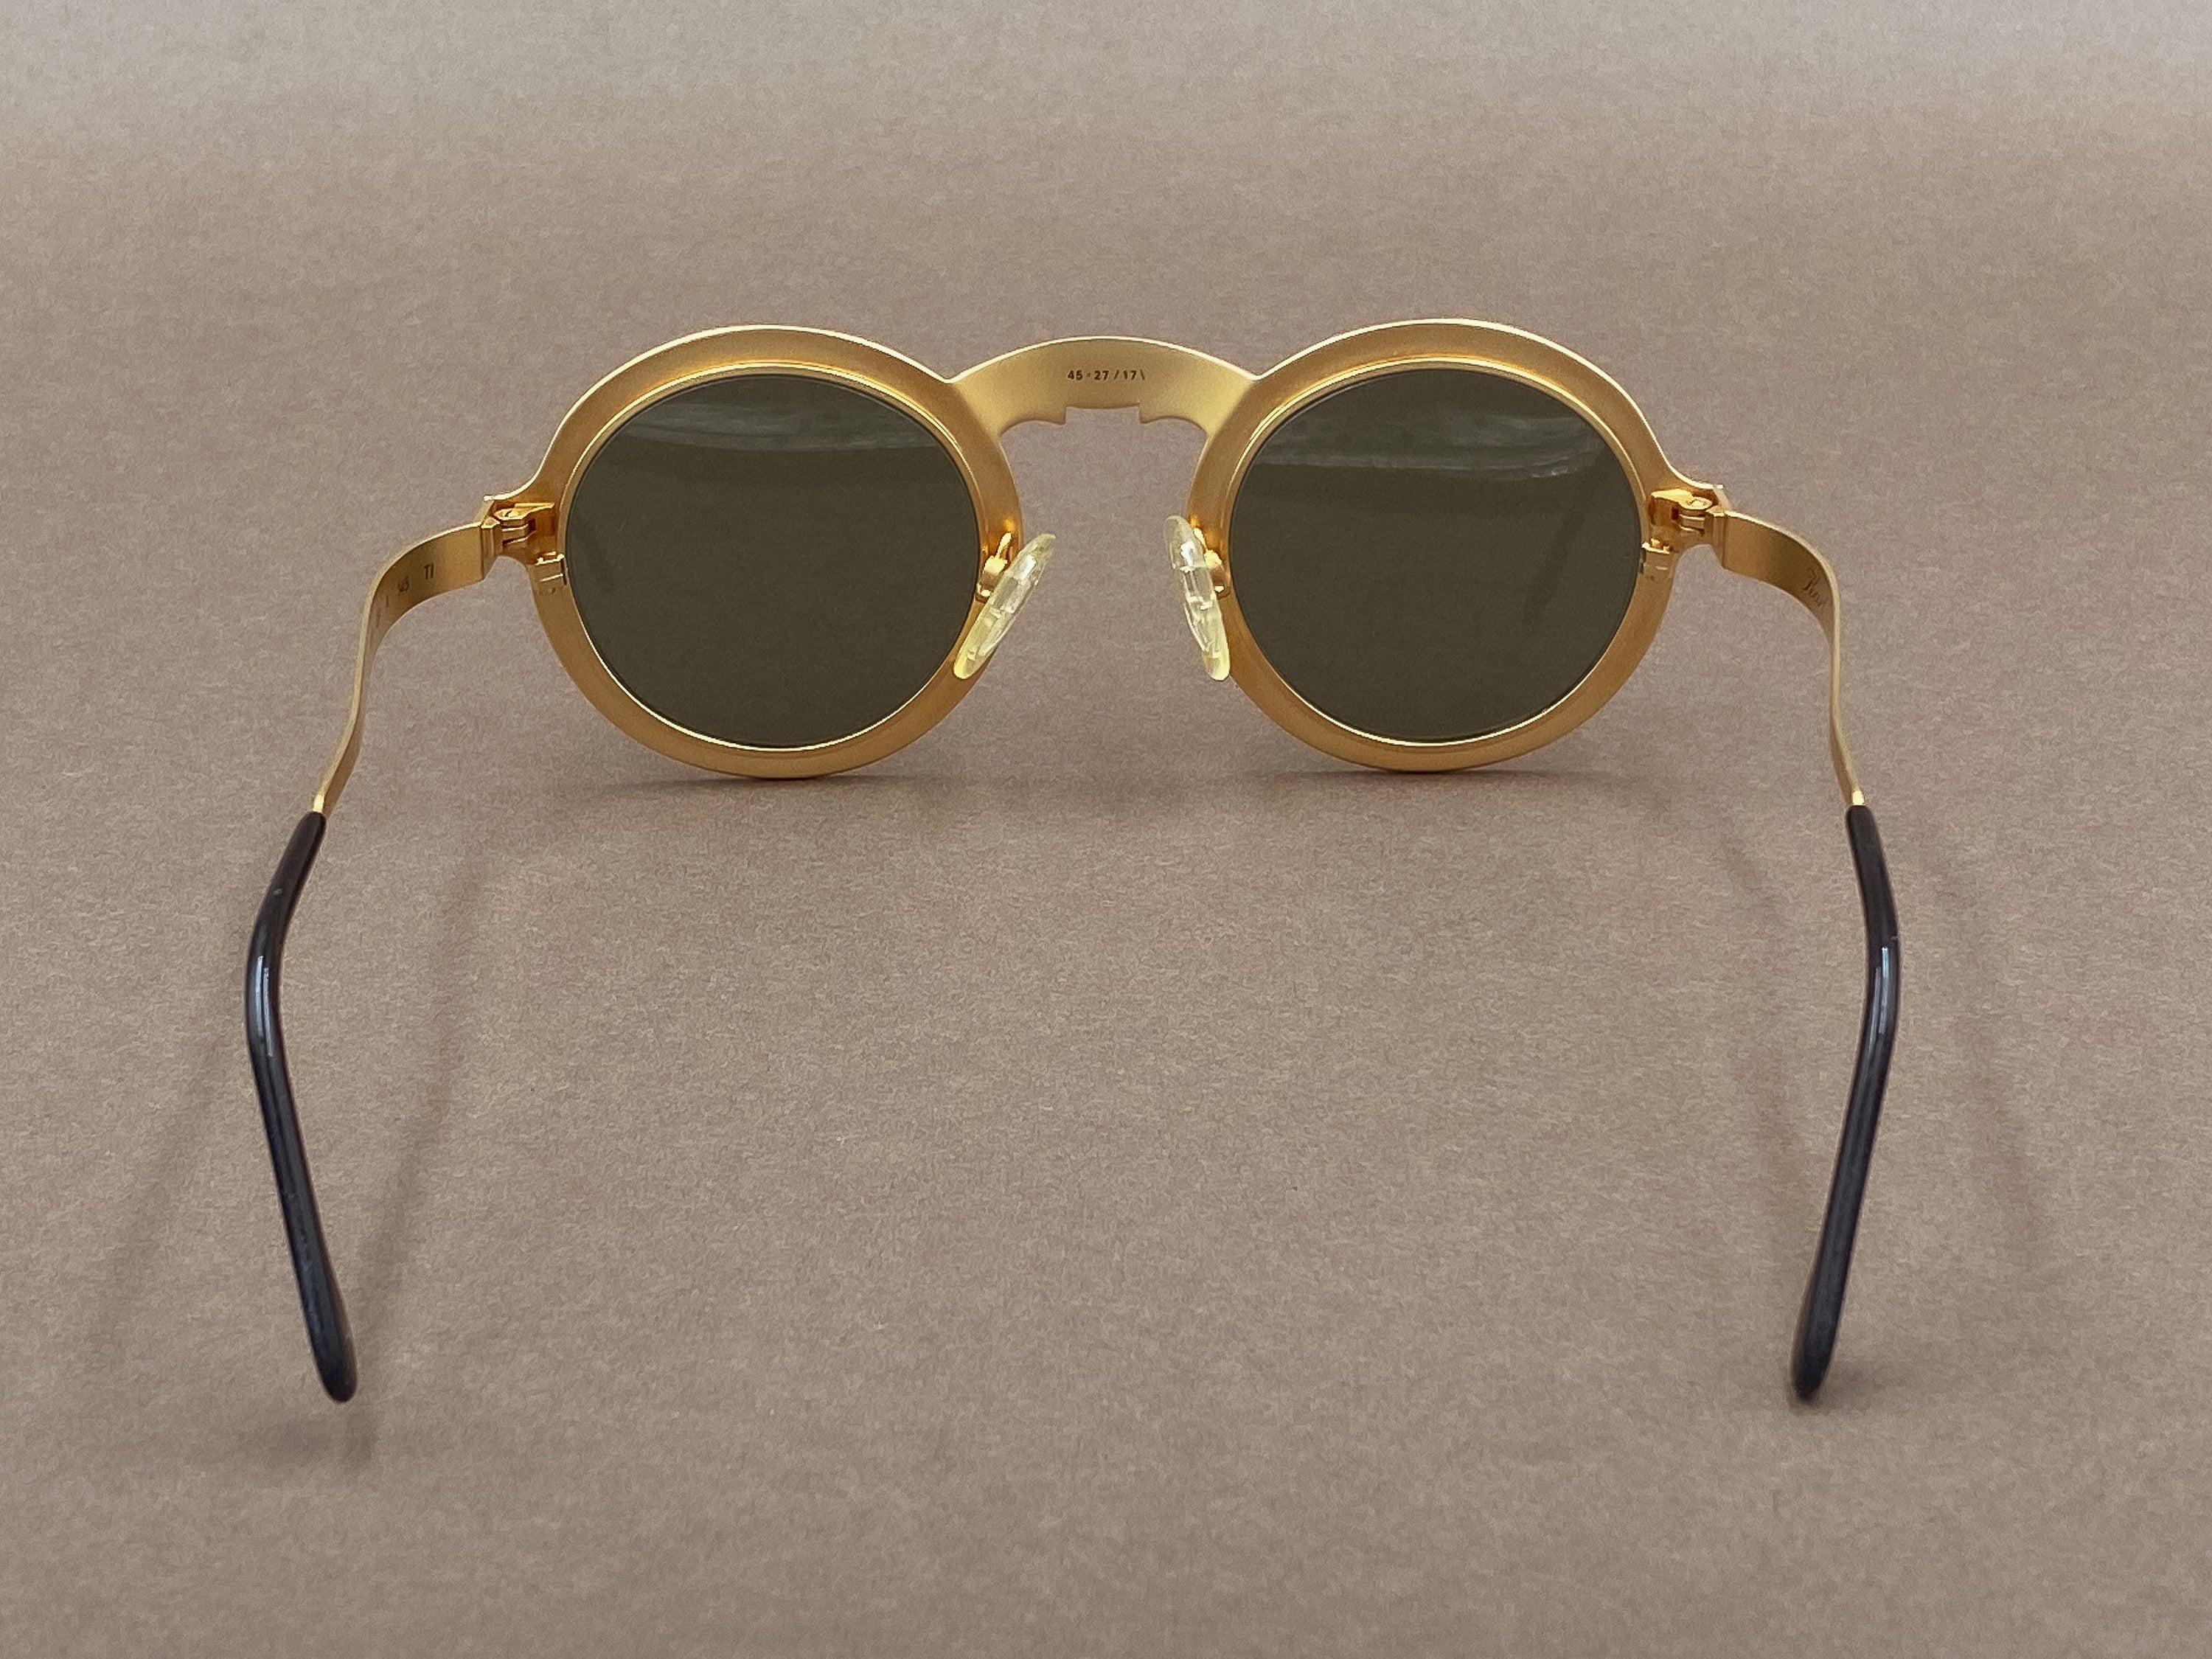 Karl Lagerfeld 4501 sunglasses